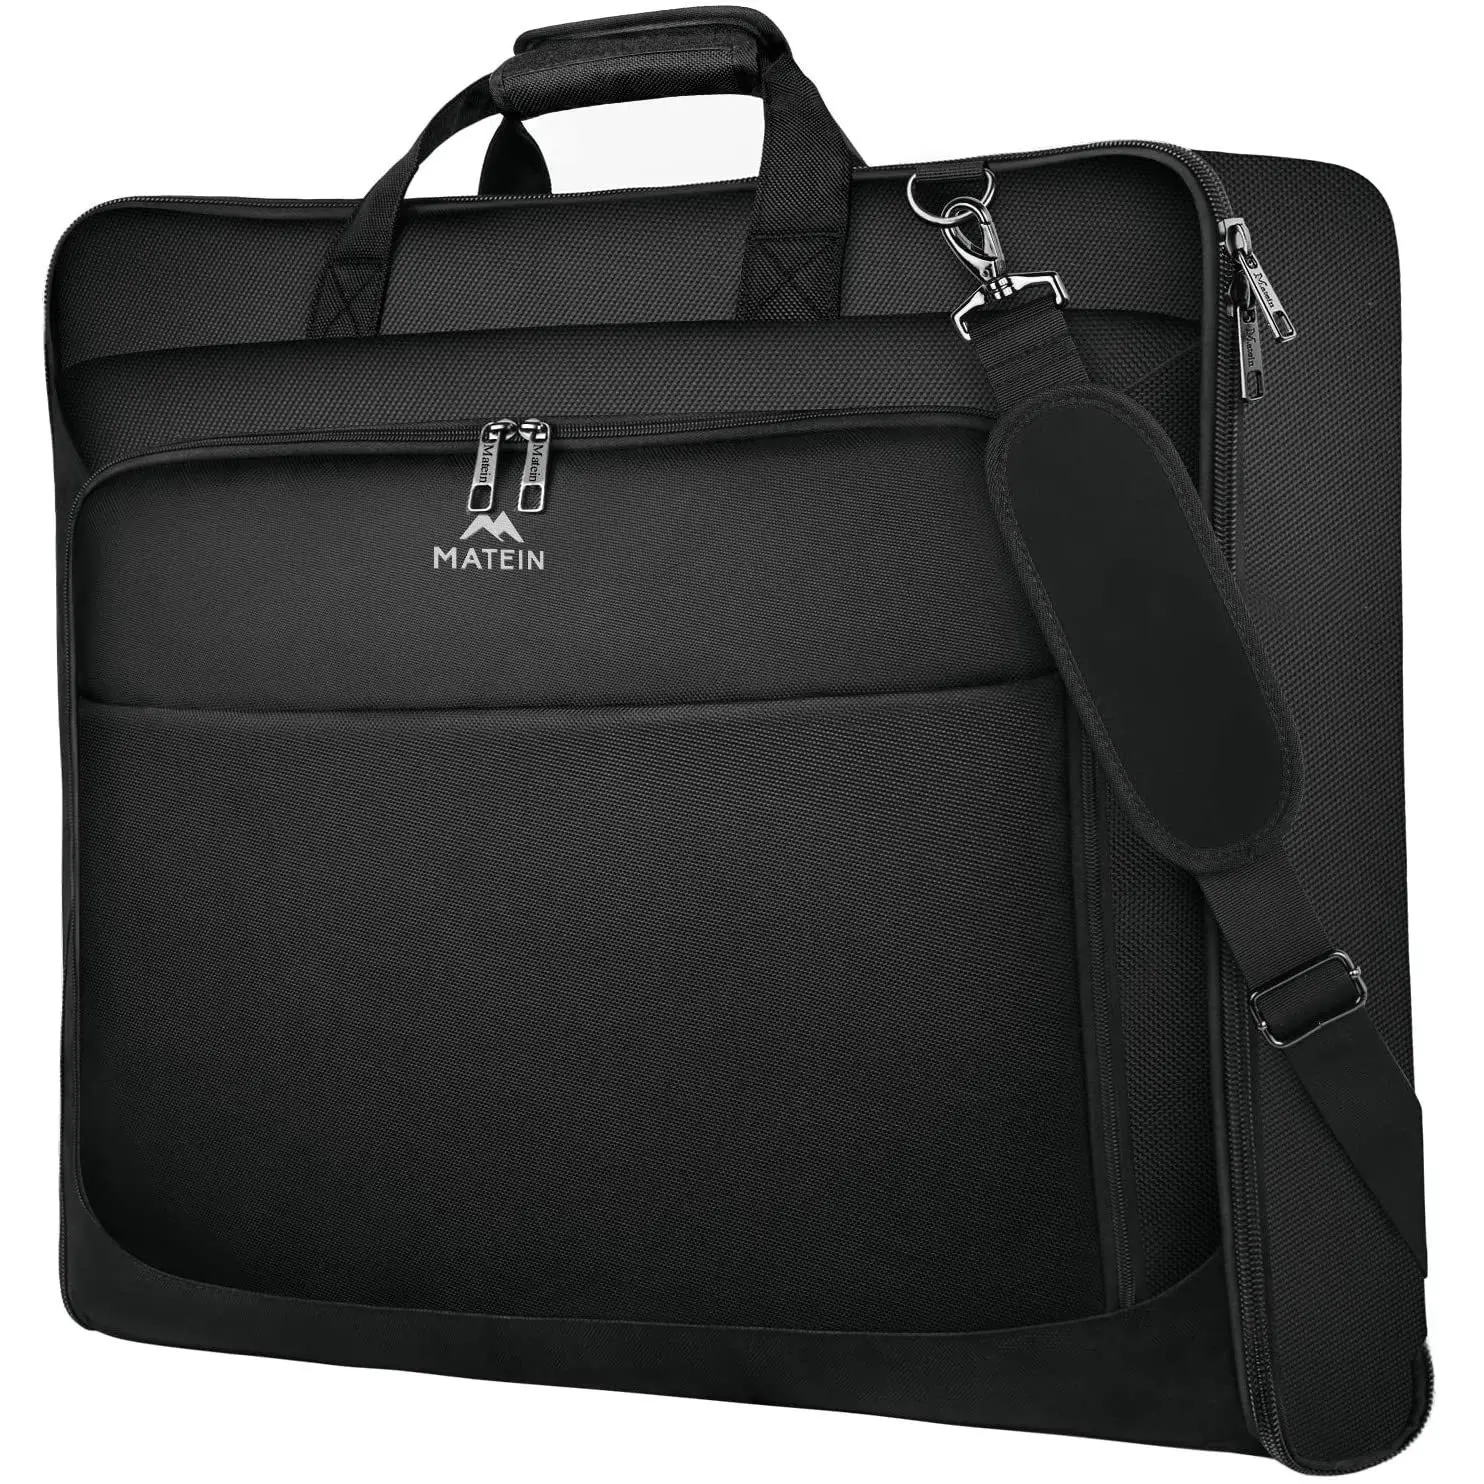 

Foldable Business Large Suit Travel Bag Custom Black Women Water Resistant Luggage Bags Wrinkle Free Garment Bags